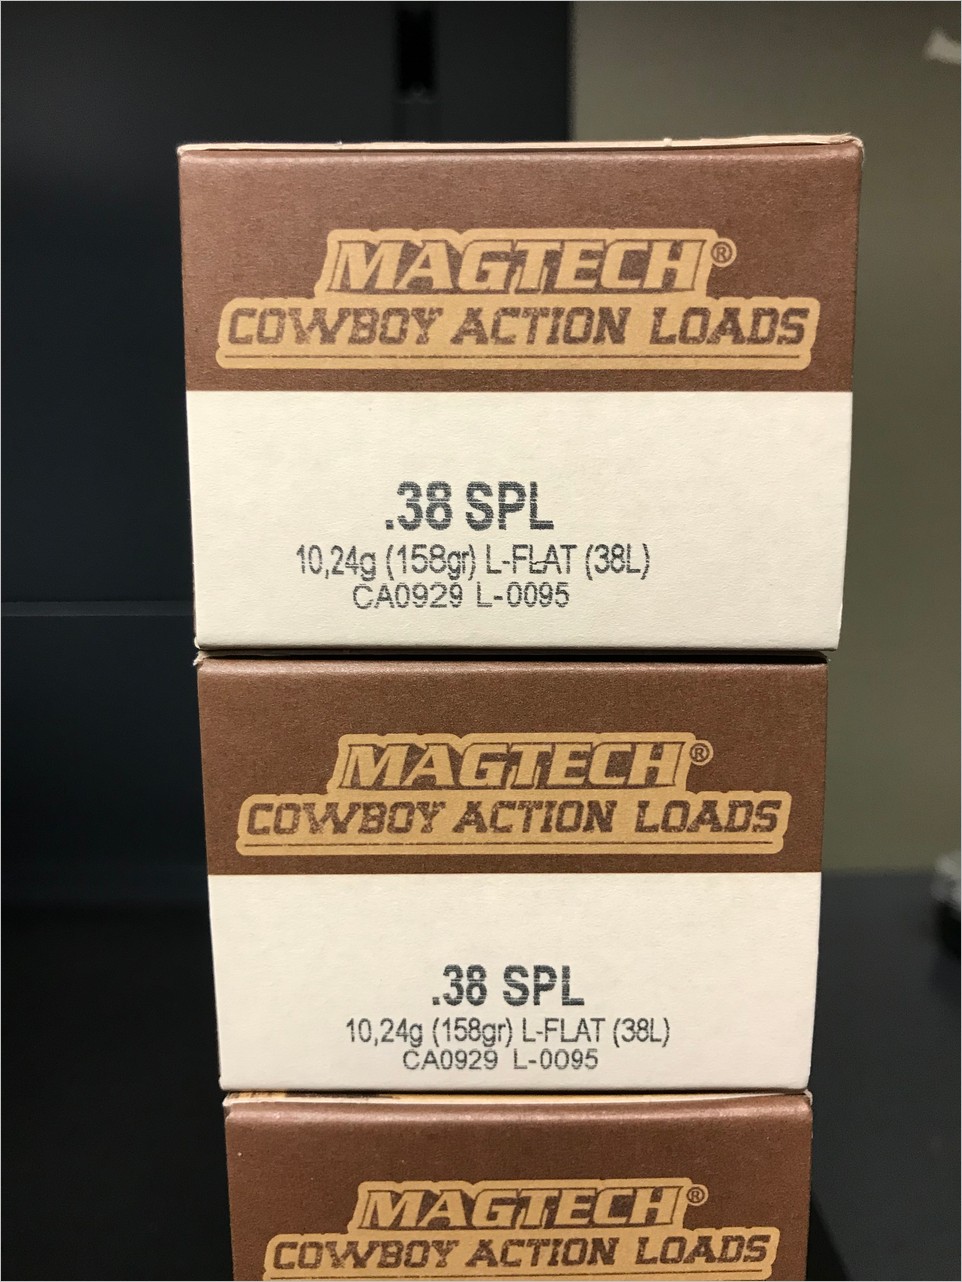 MAGTECH .38 SPL 158gr L-FLAT Cowboy Action Loads